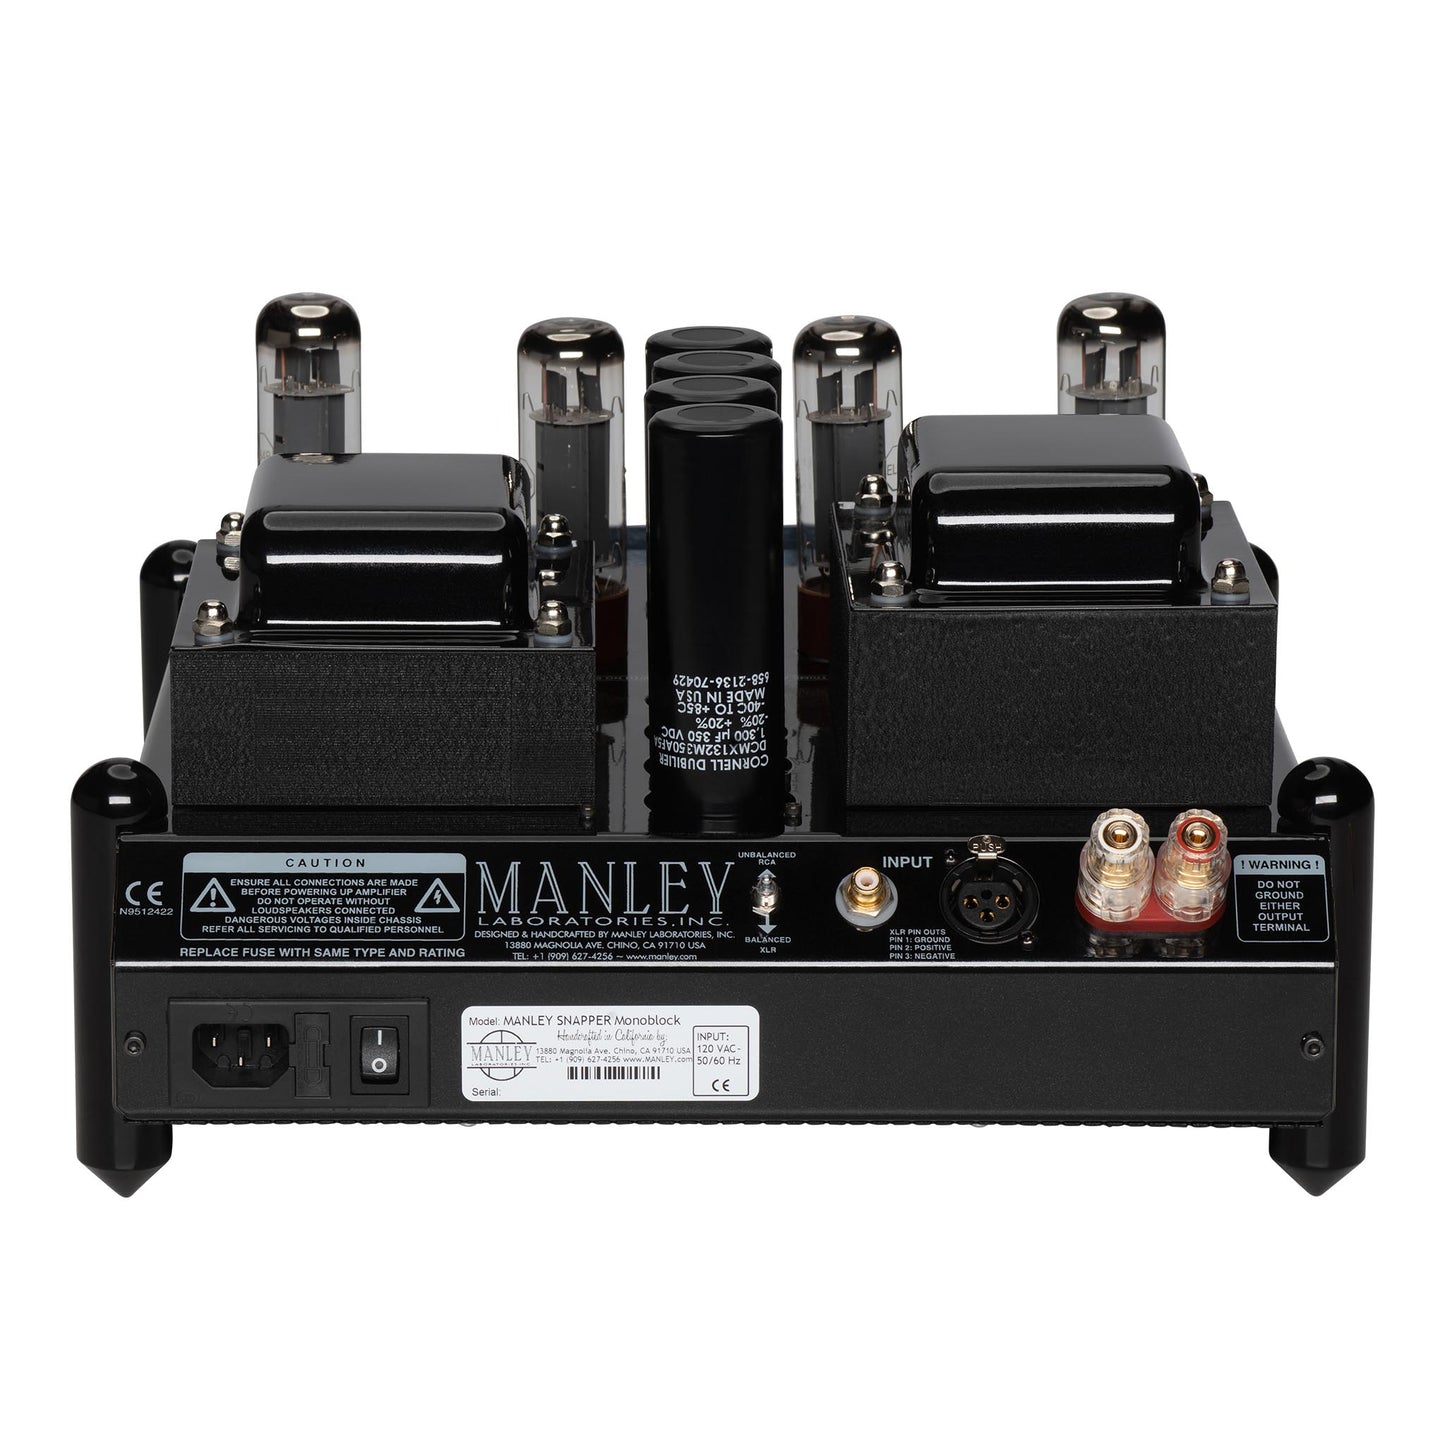 Manley Snapper Monoblock Amplifiers (pair)